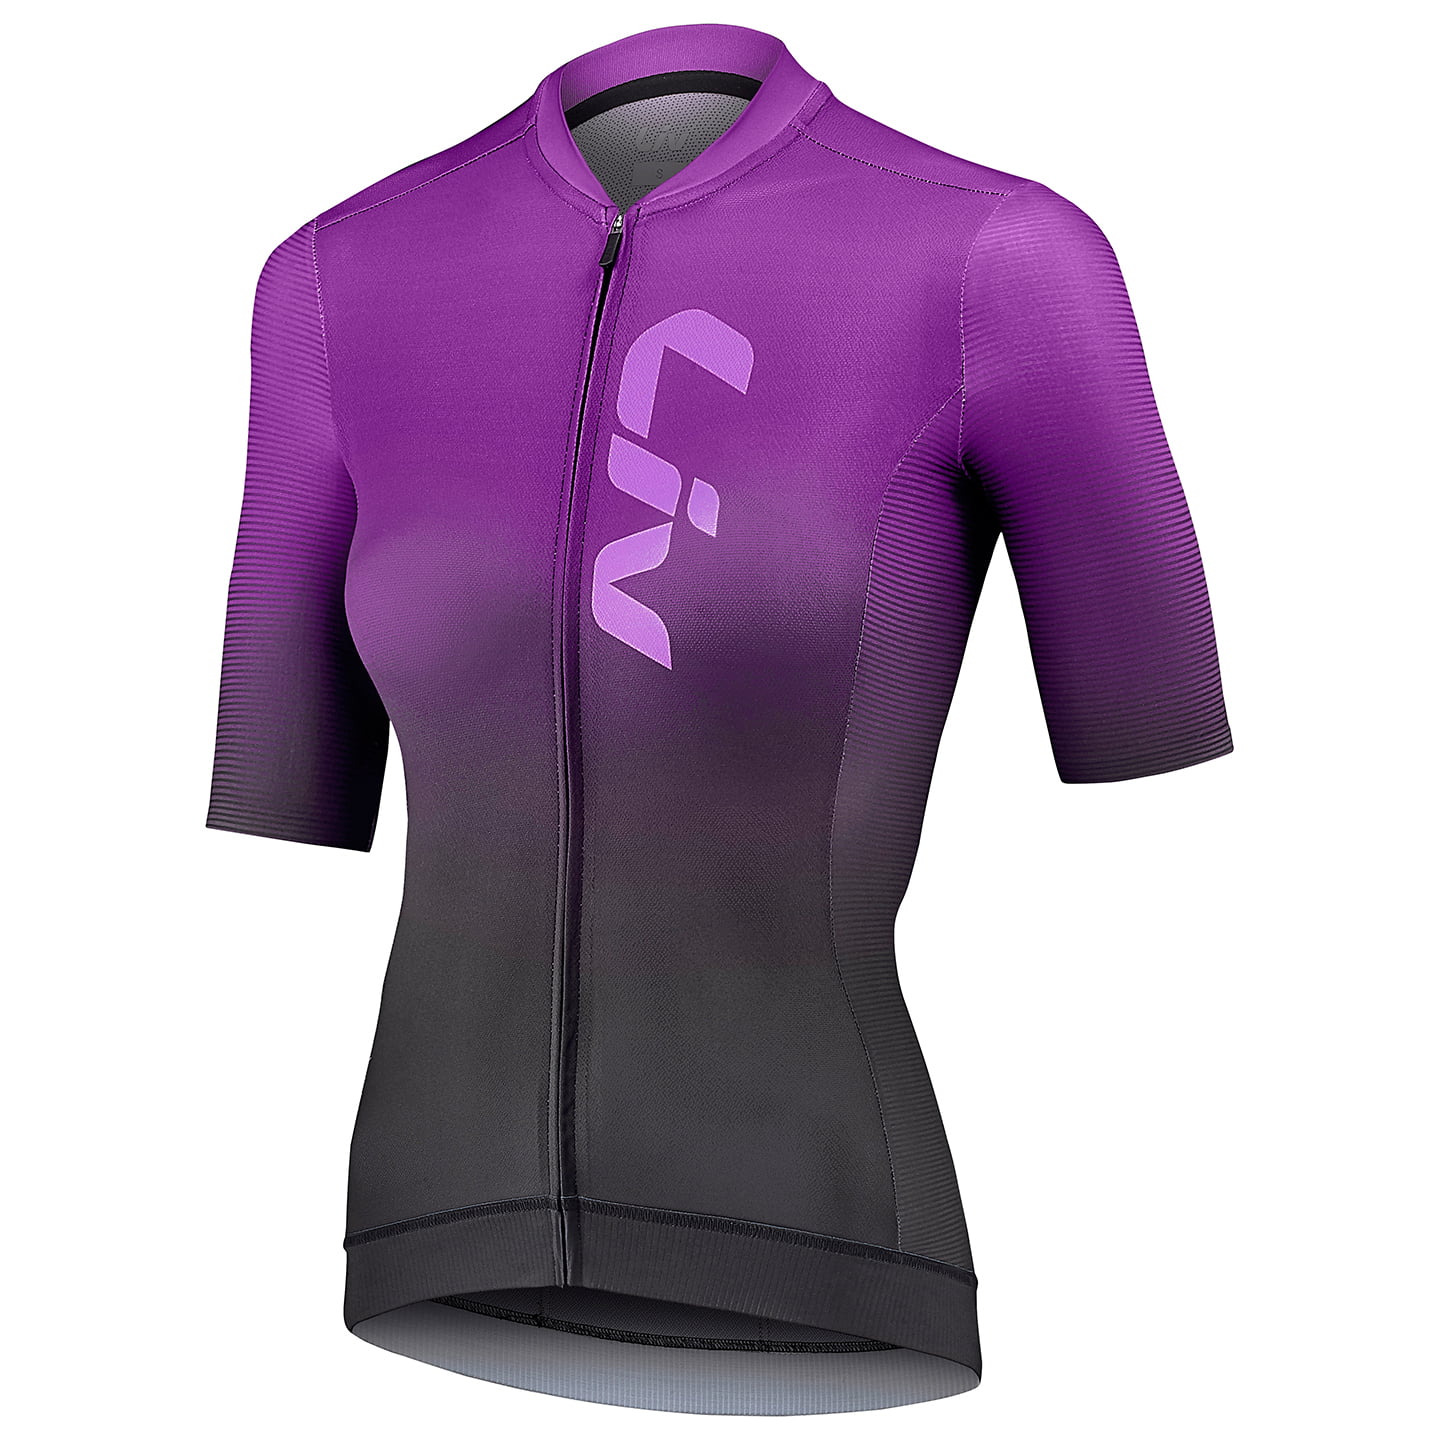 LIV Race Day Women’s Short Sleeve Jersey Women’s Short Sleeve Jersey, size S, Cycling jersey, Cycle gear